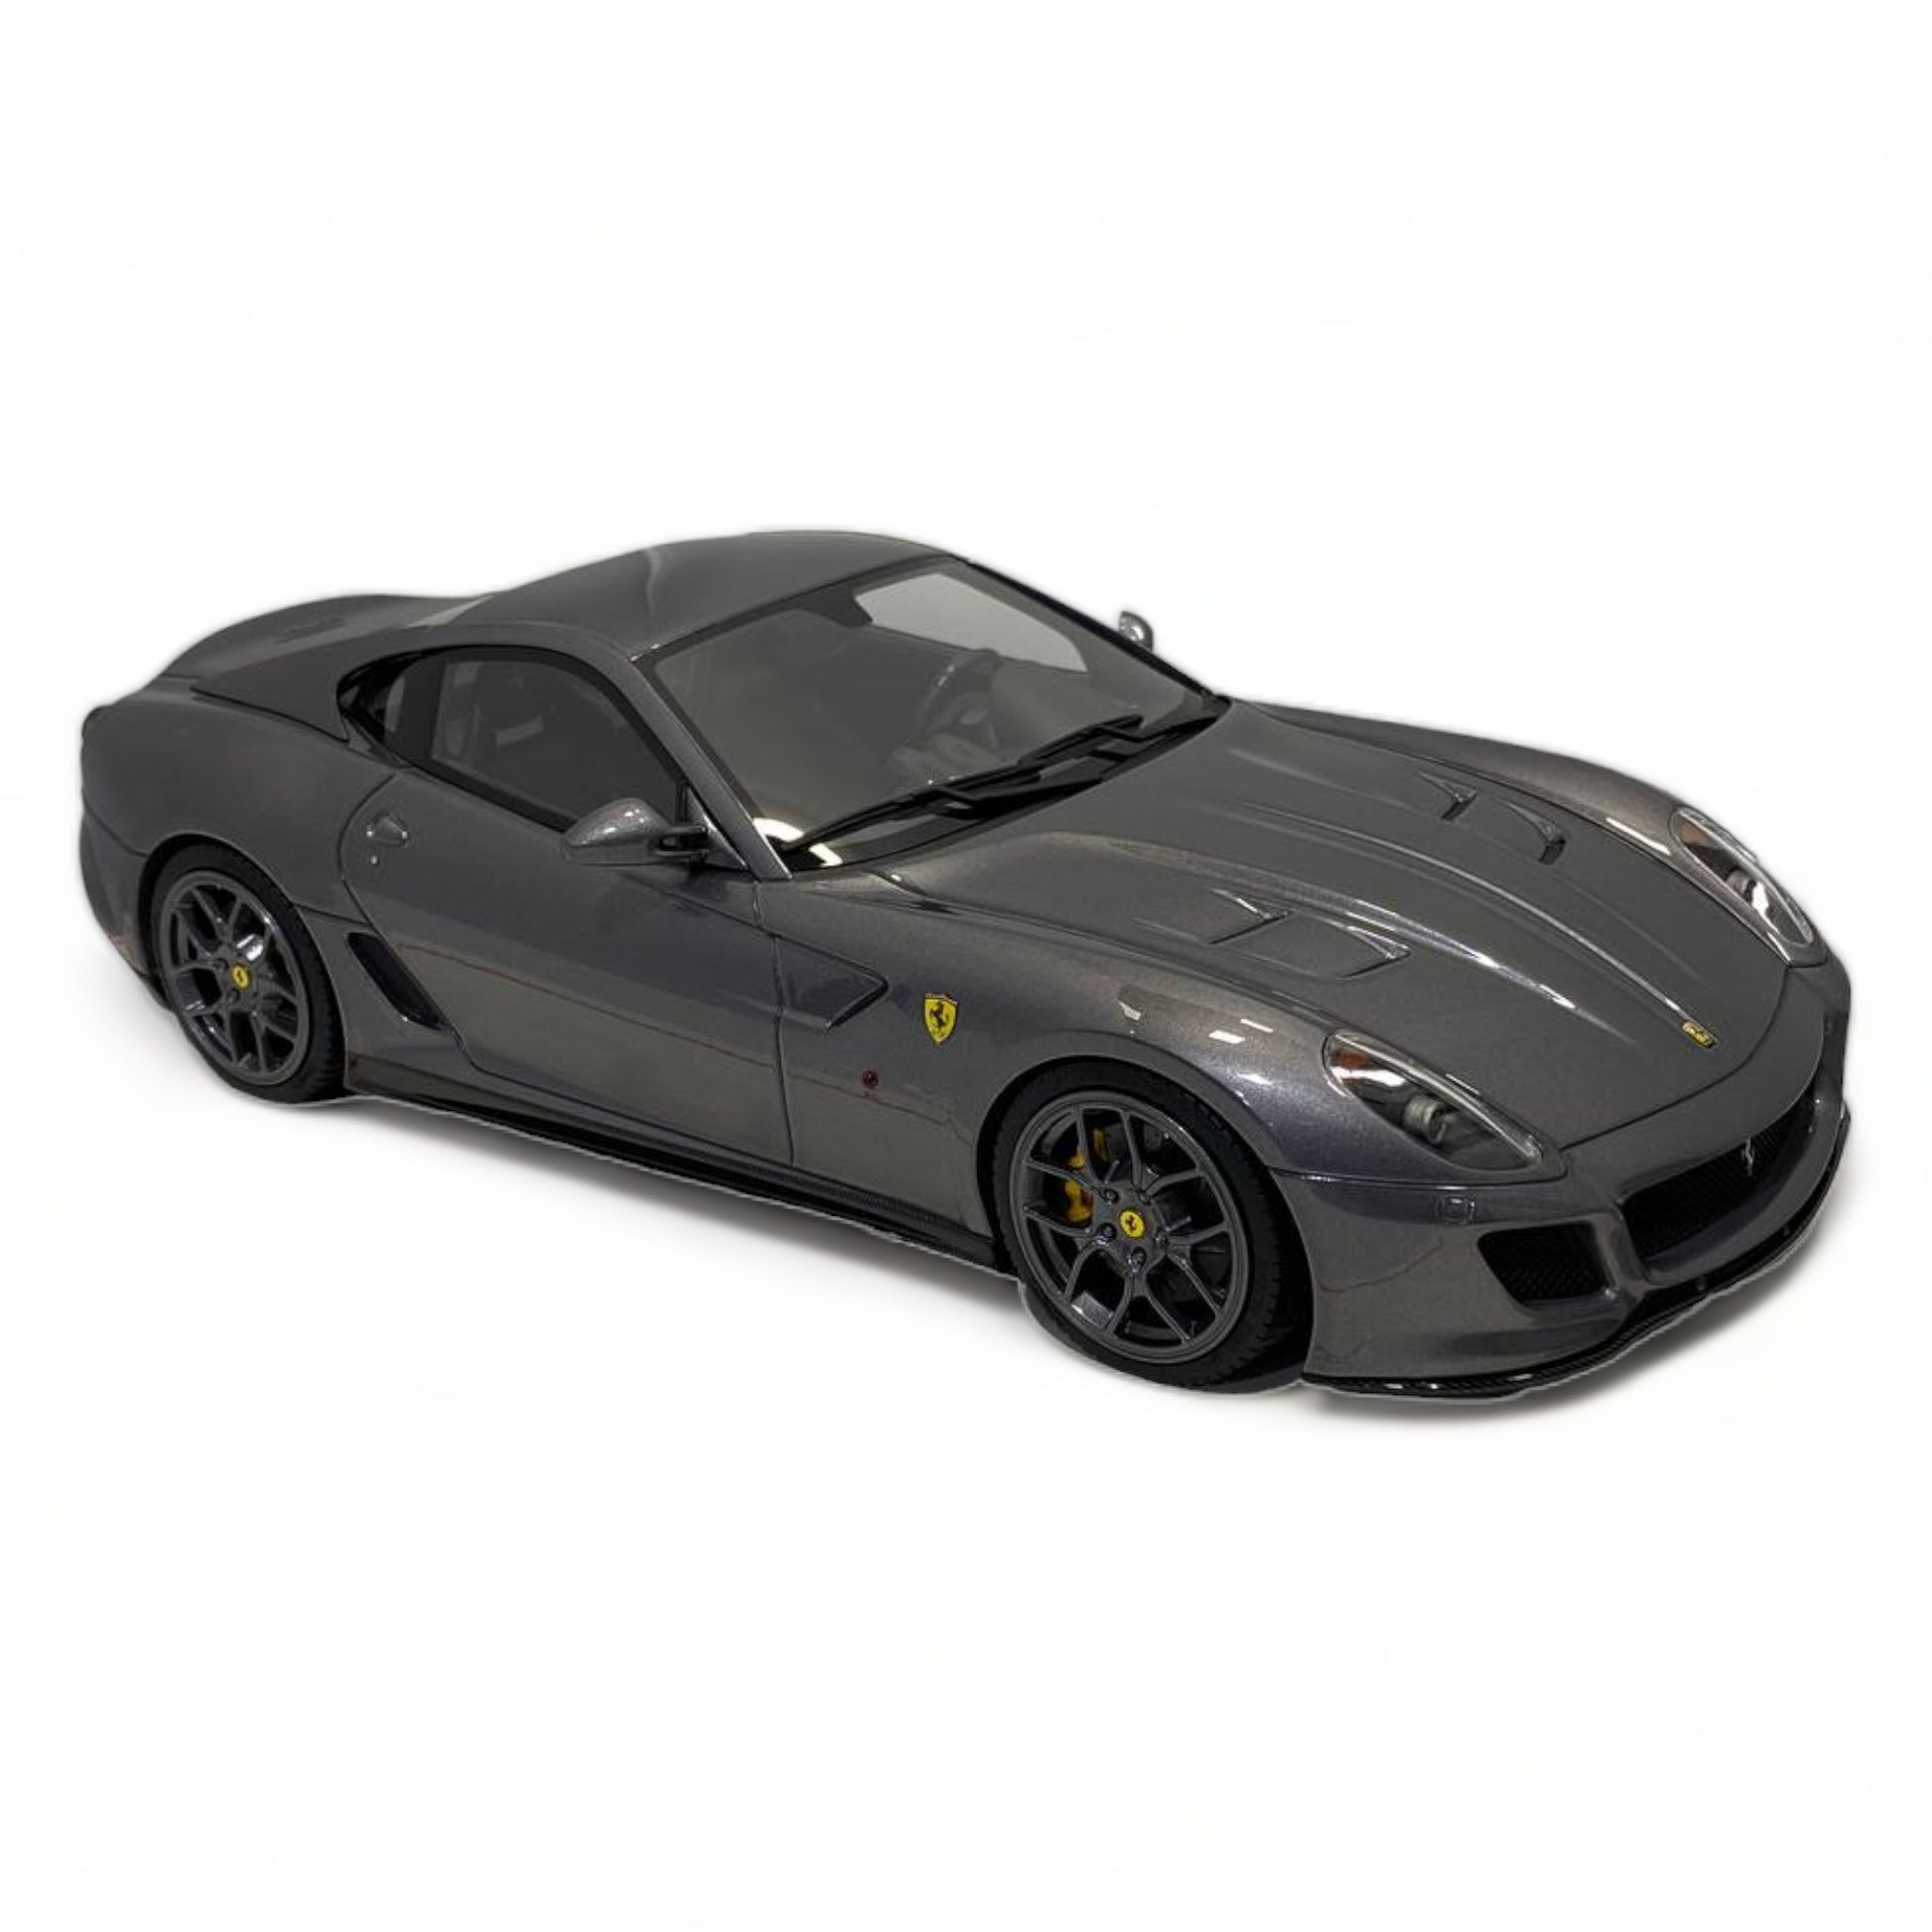 RUNNER Ferrari 99 GTO LIMITED 66 PCS SILVER GREY|Sold in Dturman.com Dubai UAE.